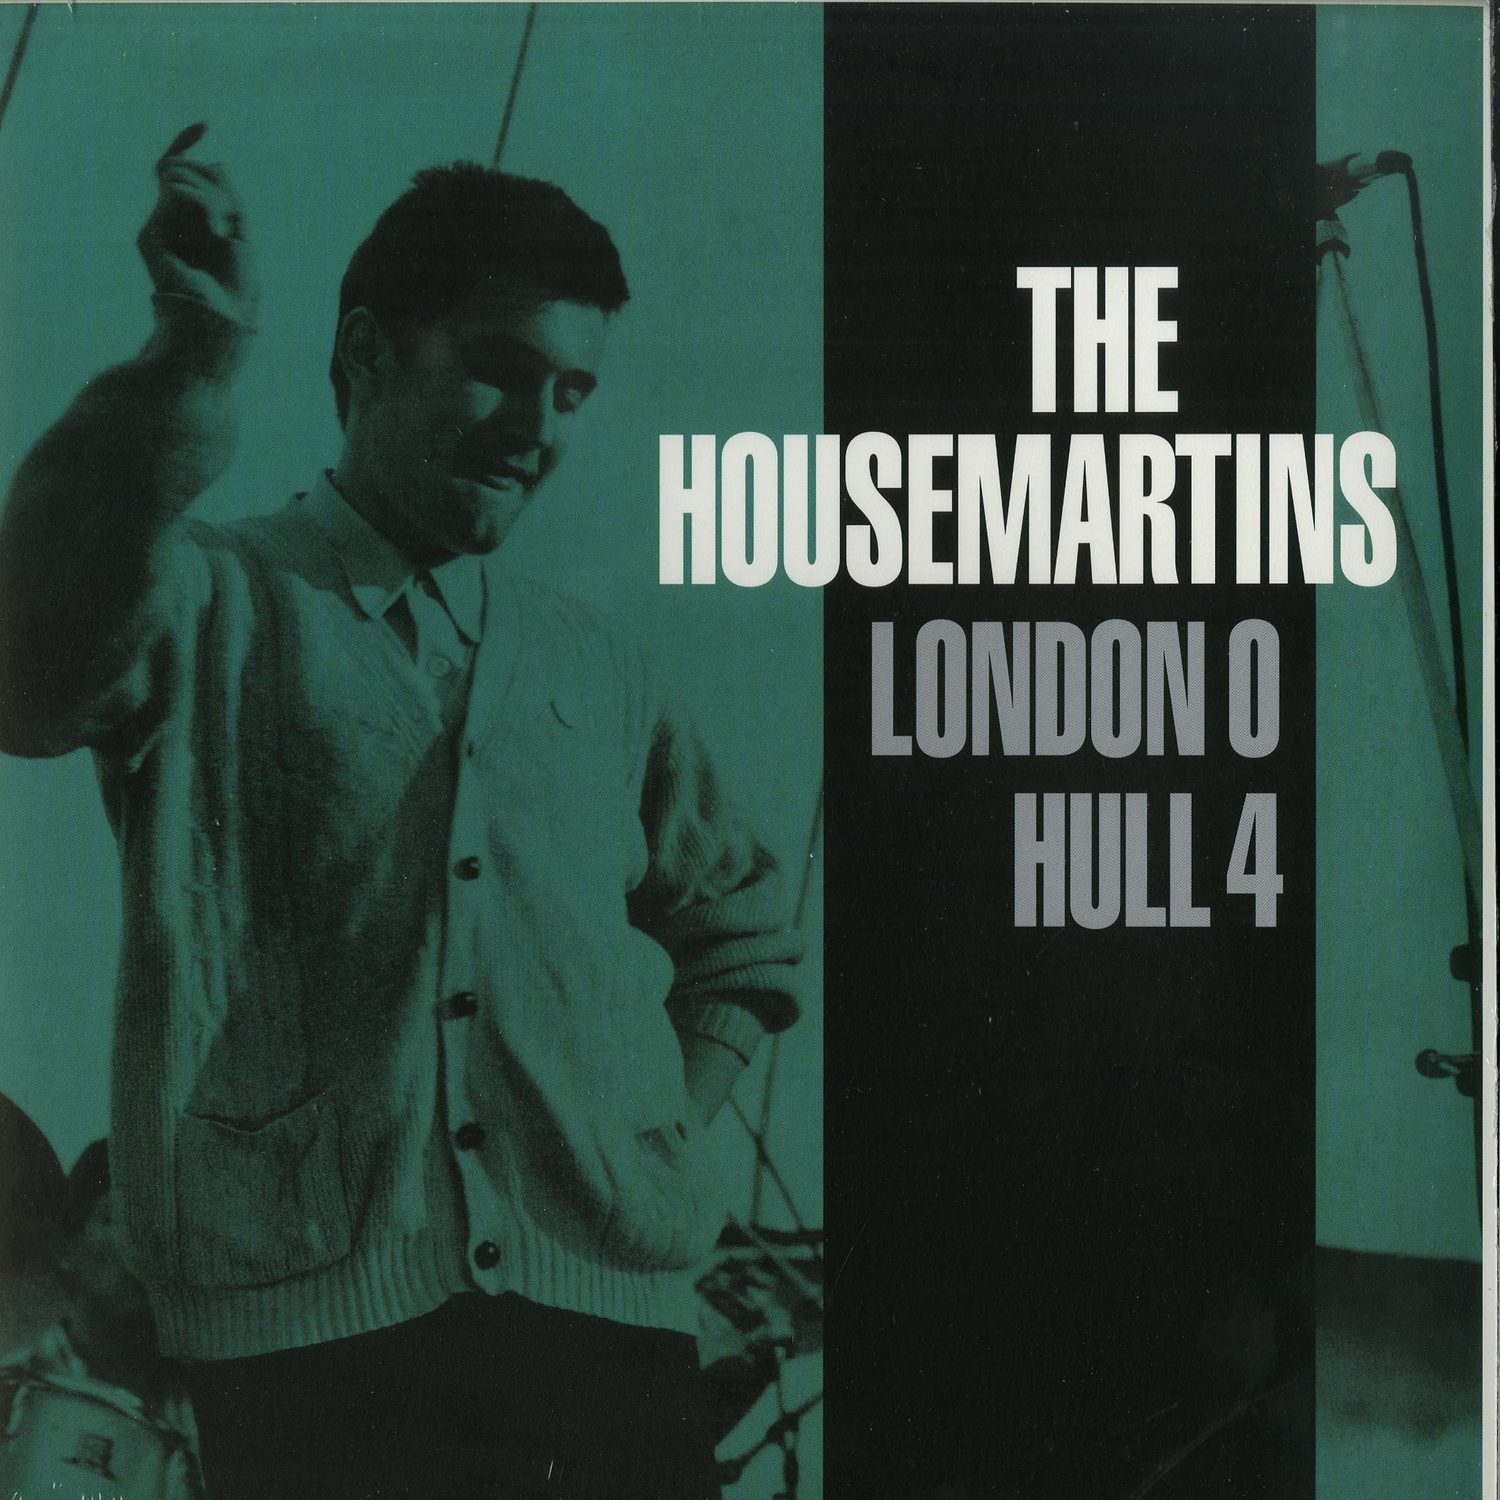 The Housemartins - LONDON 0 HULL 4 